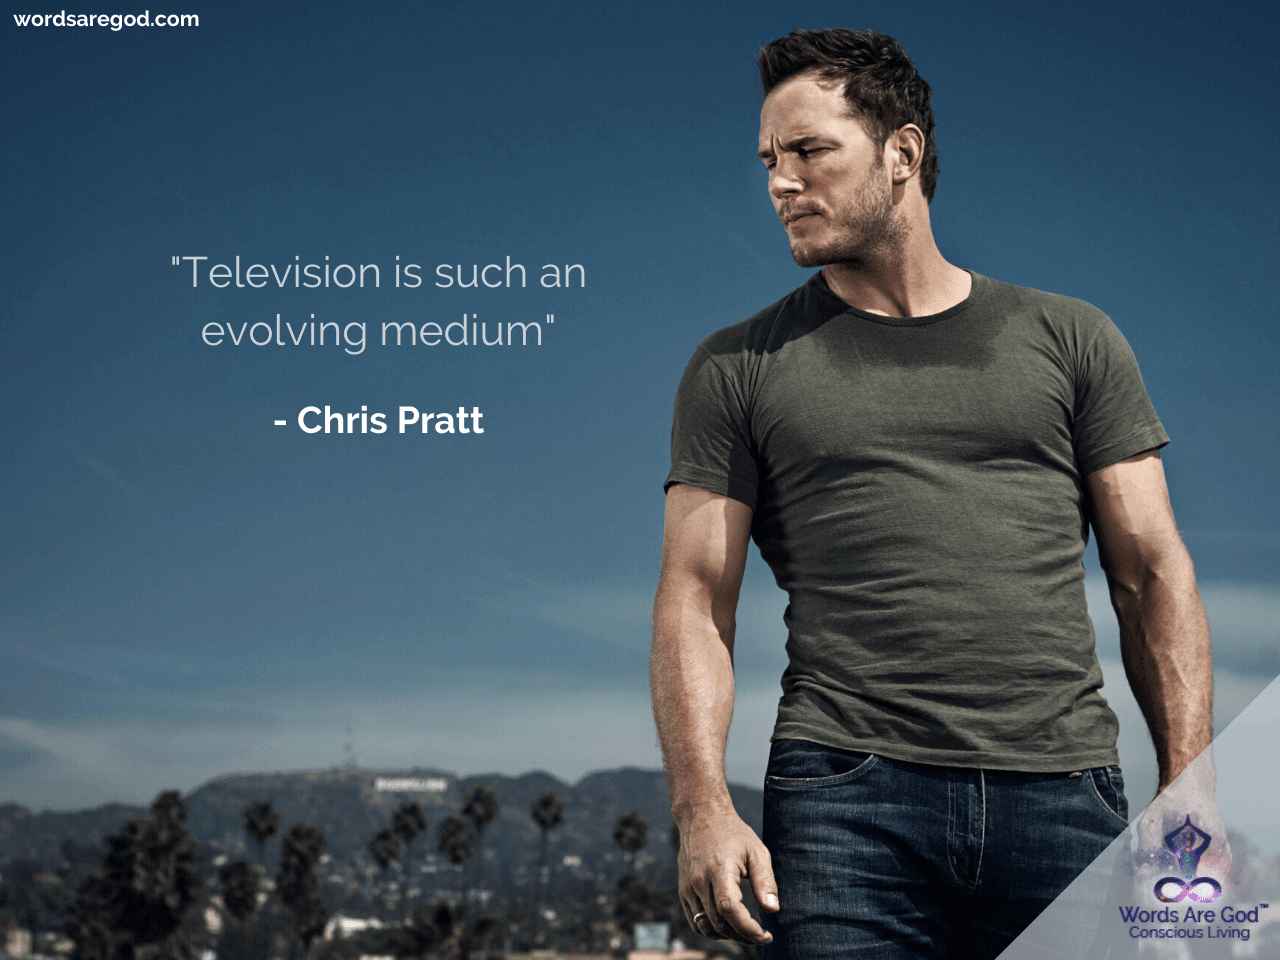 Chris Pratt Life Quote by Chris Pratt